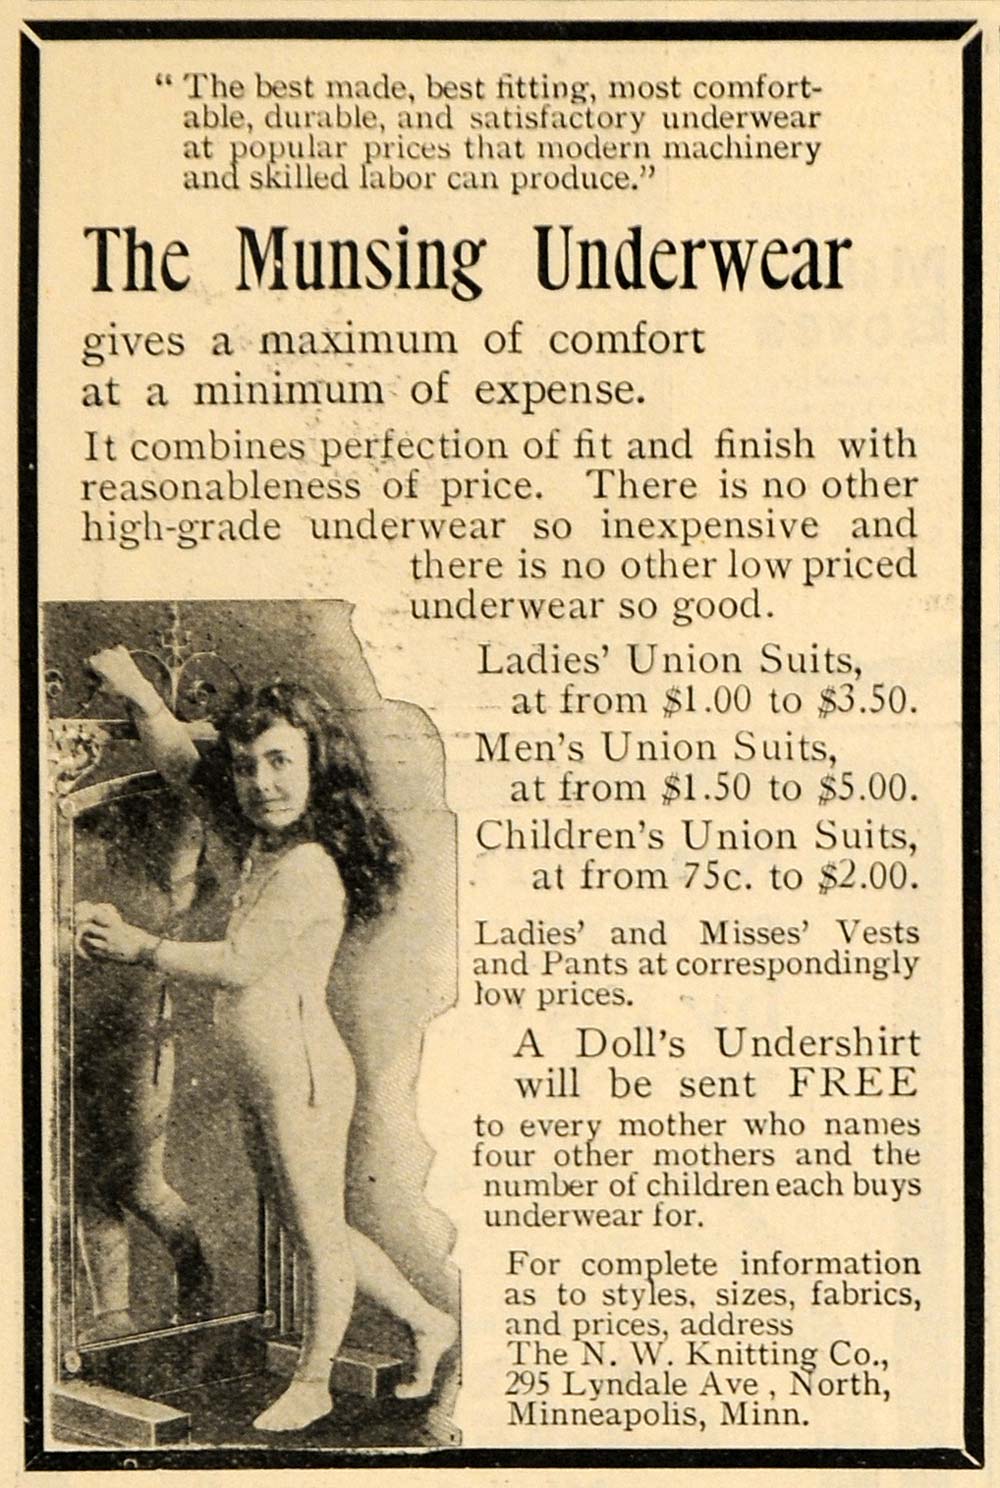 1901 Ad Munsing Underwear Child Union Suit N W Knitting - ORIGINAL TOM1